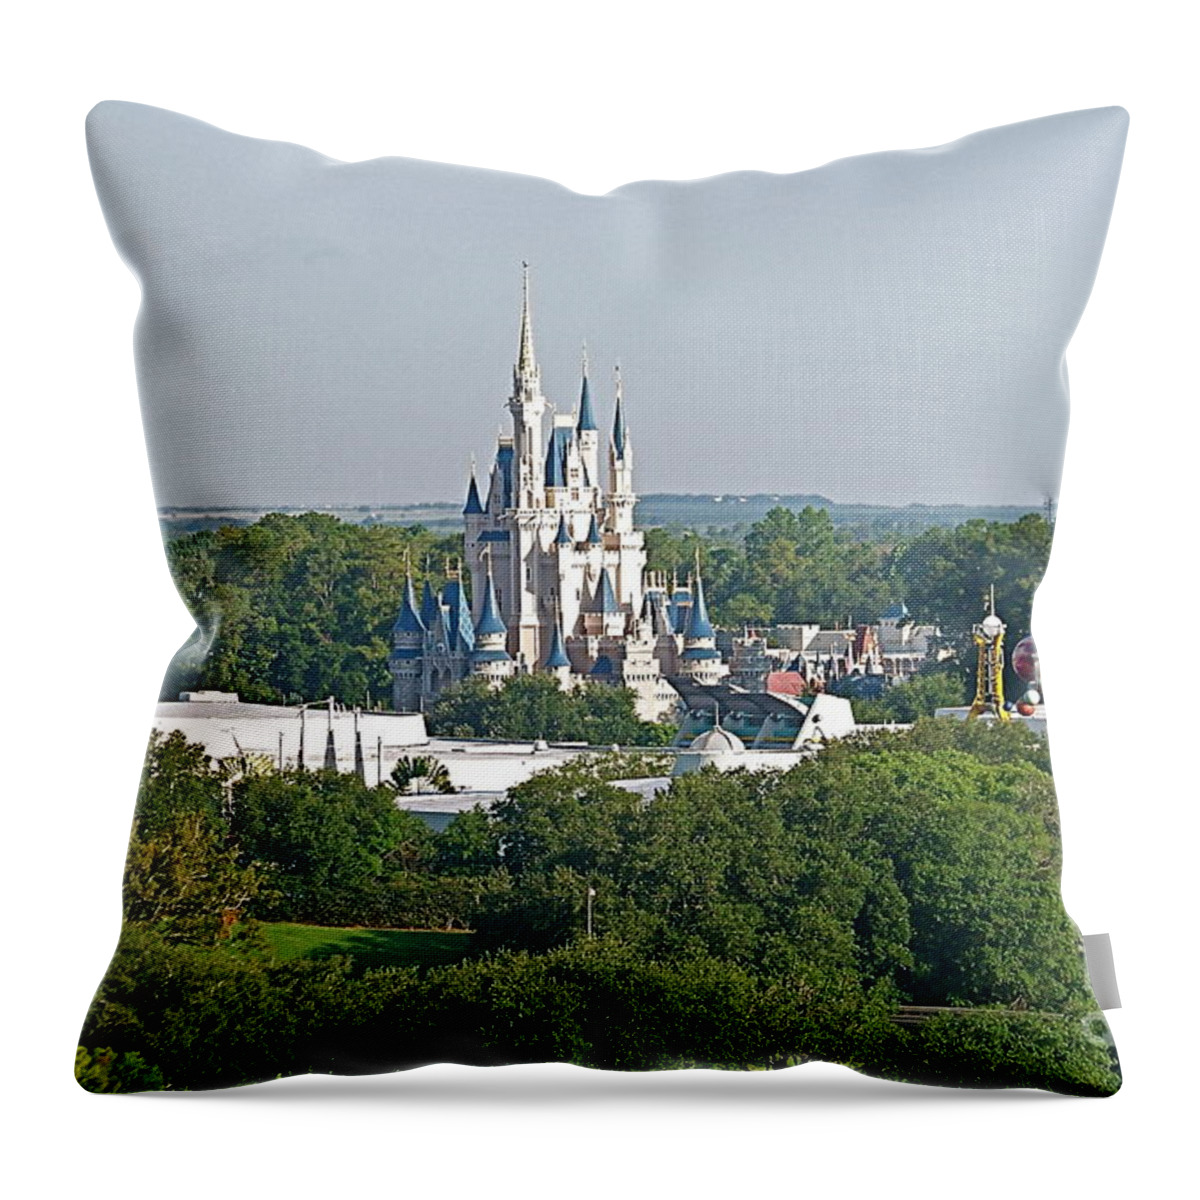 Wdw Throw Pillow featuring the photograph Magic Kingdom by Carol Bradley